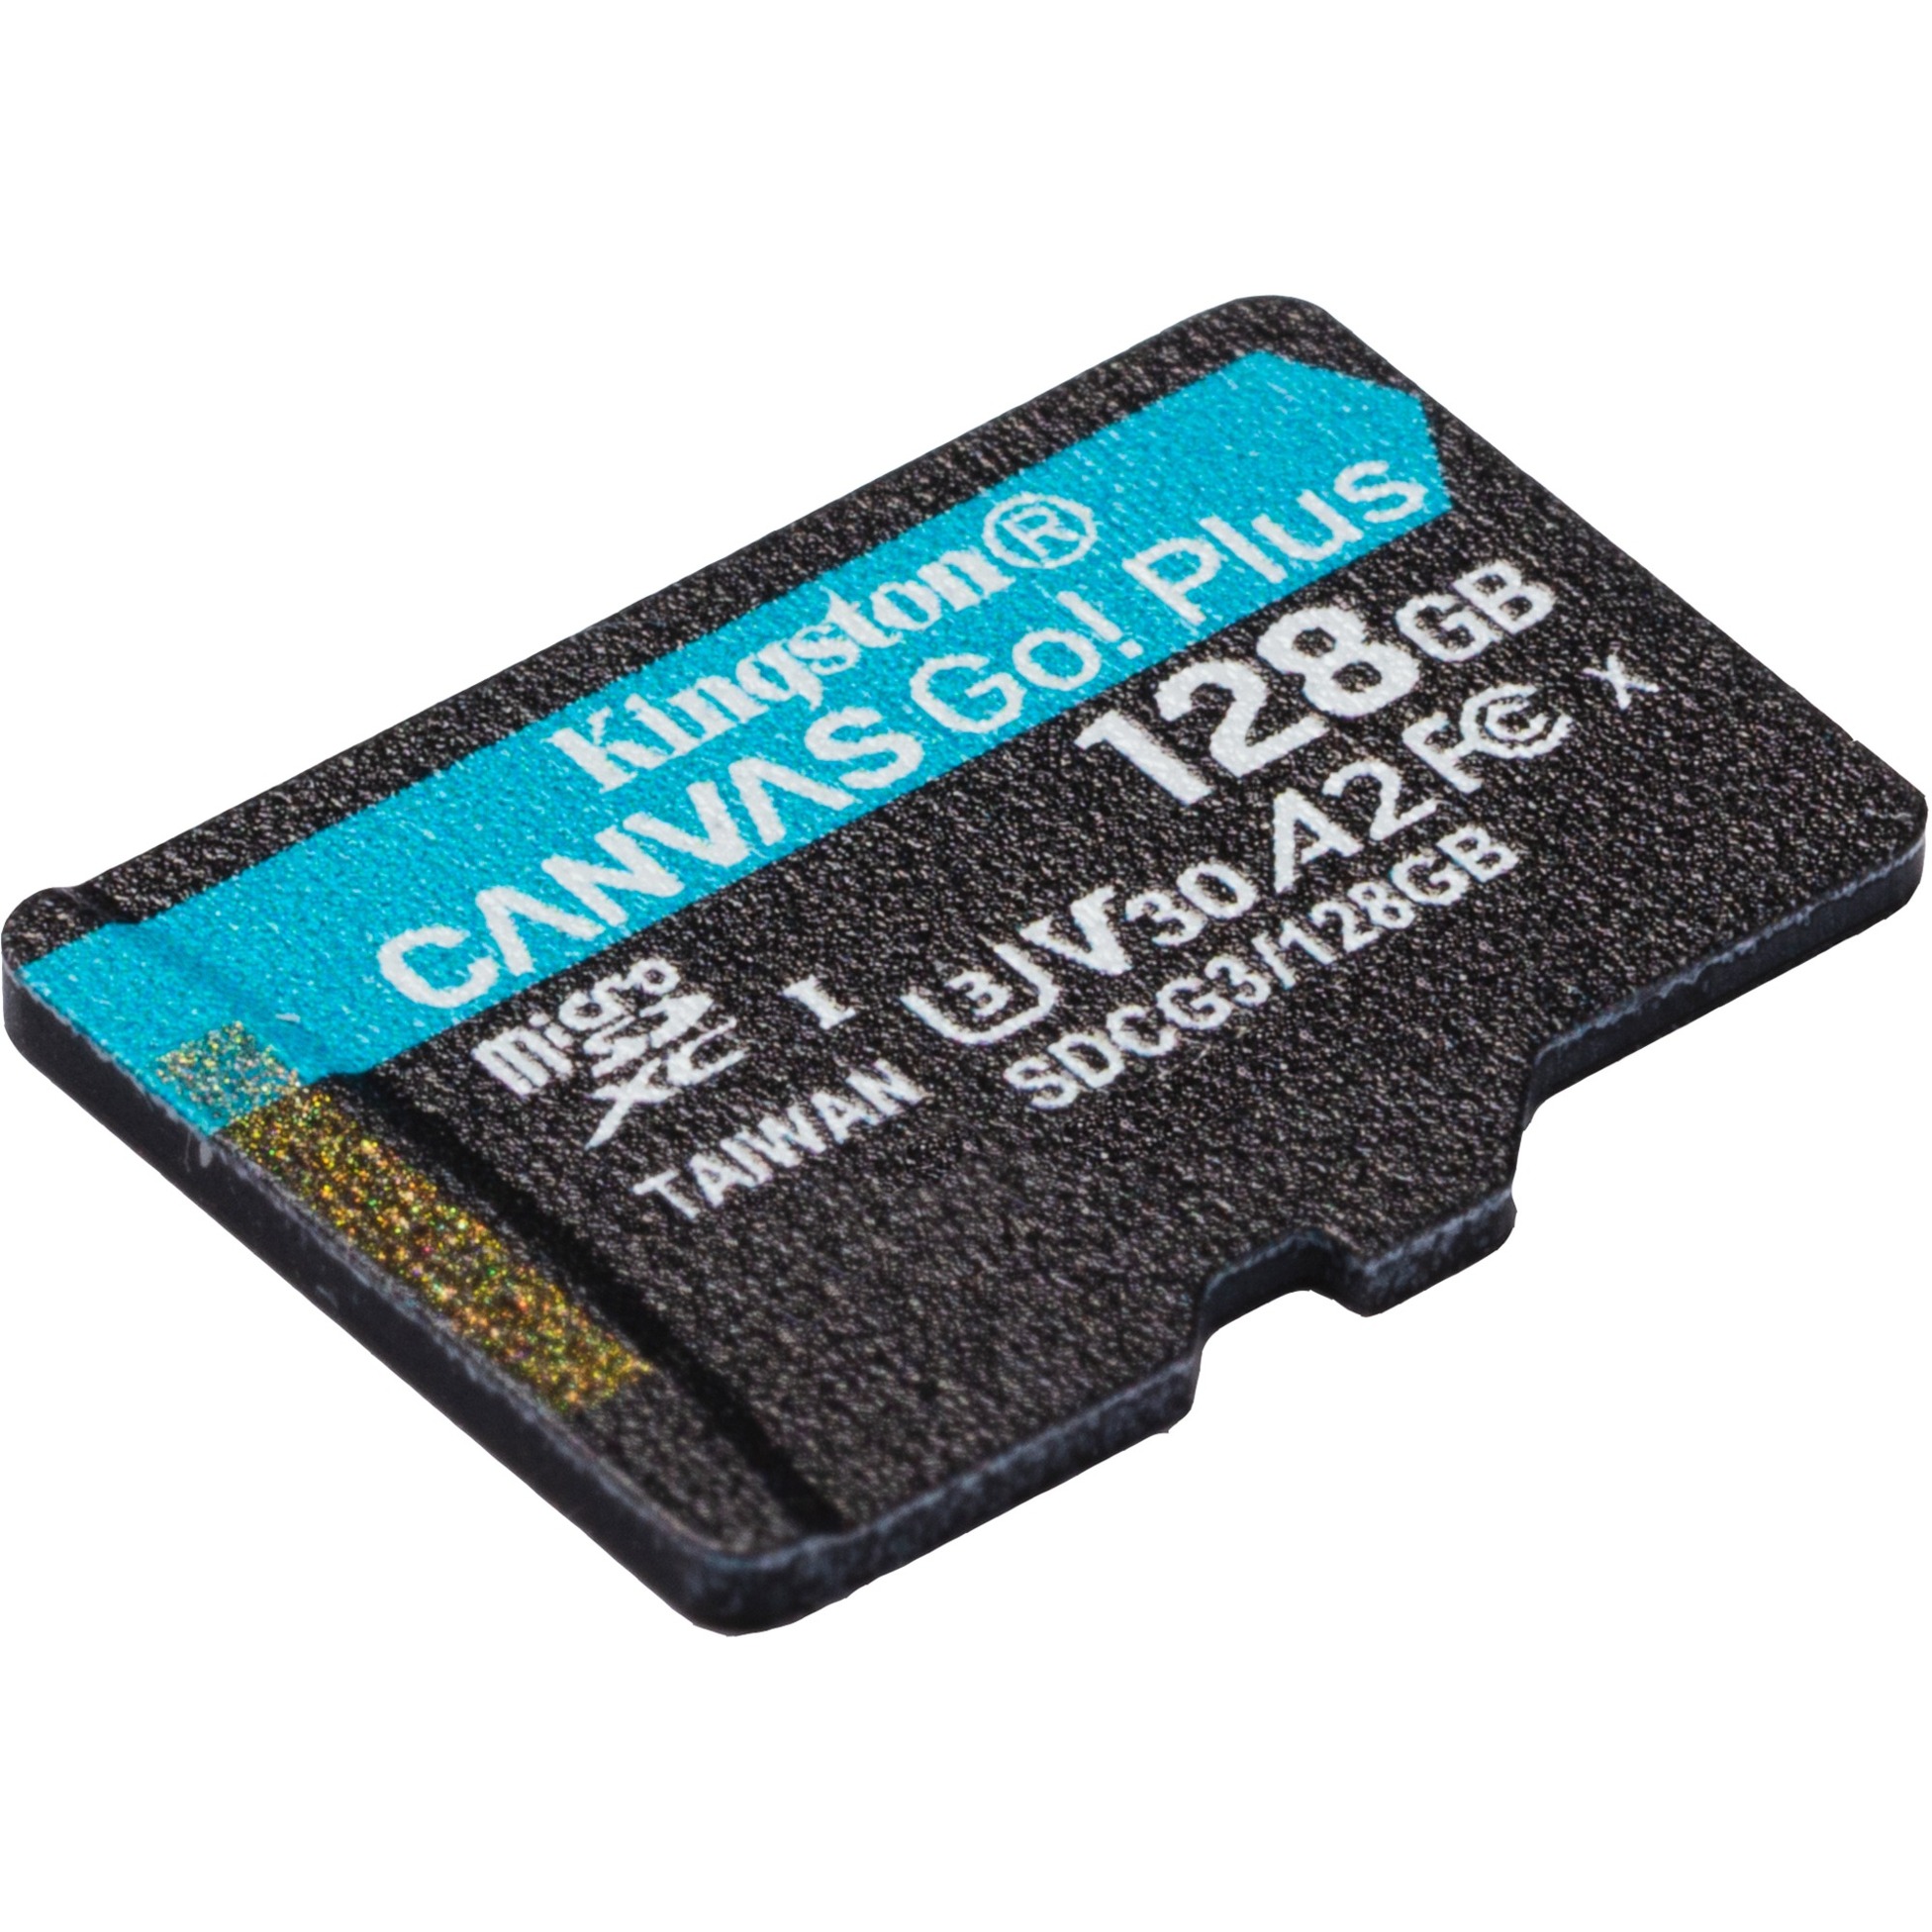 Image of Alternate - Canvas Go! Plus 128 GB microSDXC, Speicherkarte online einkaufen bei Alternate